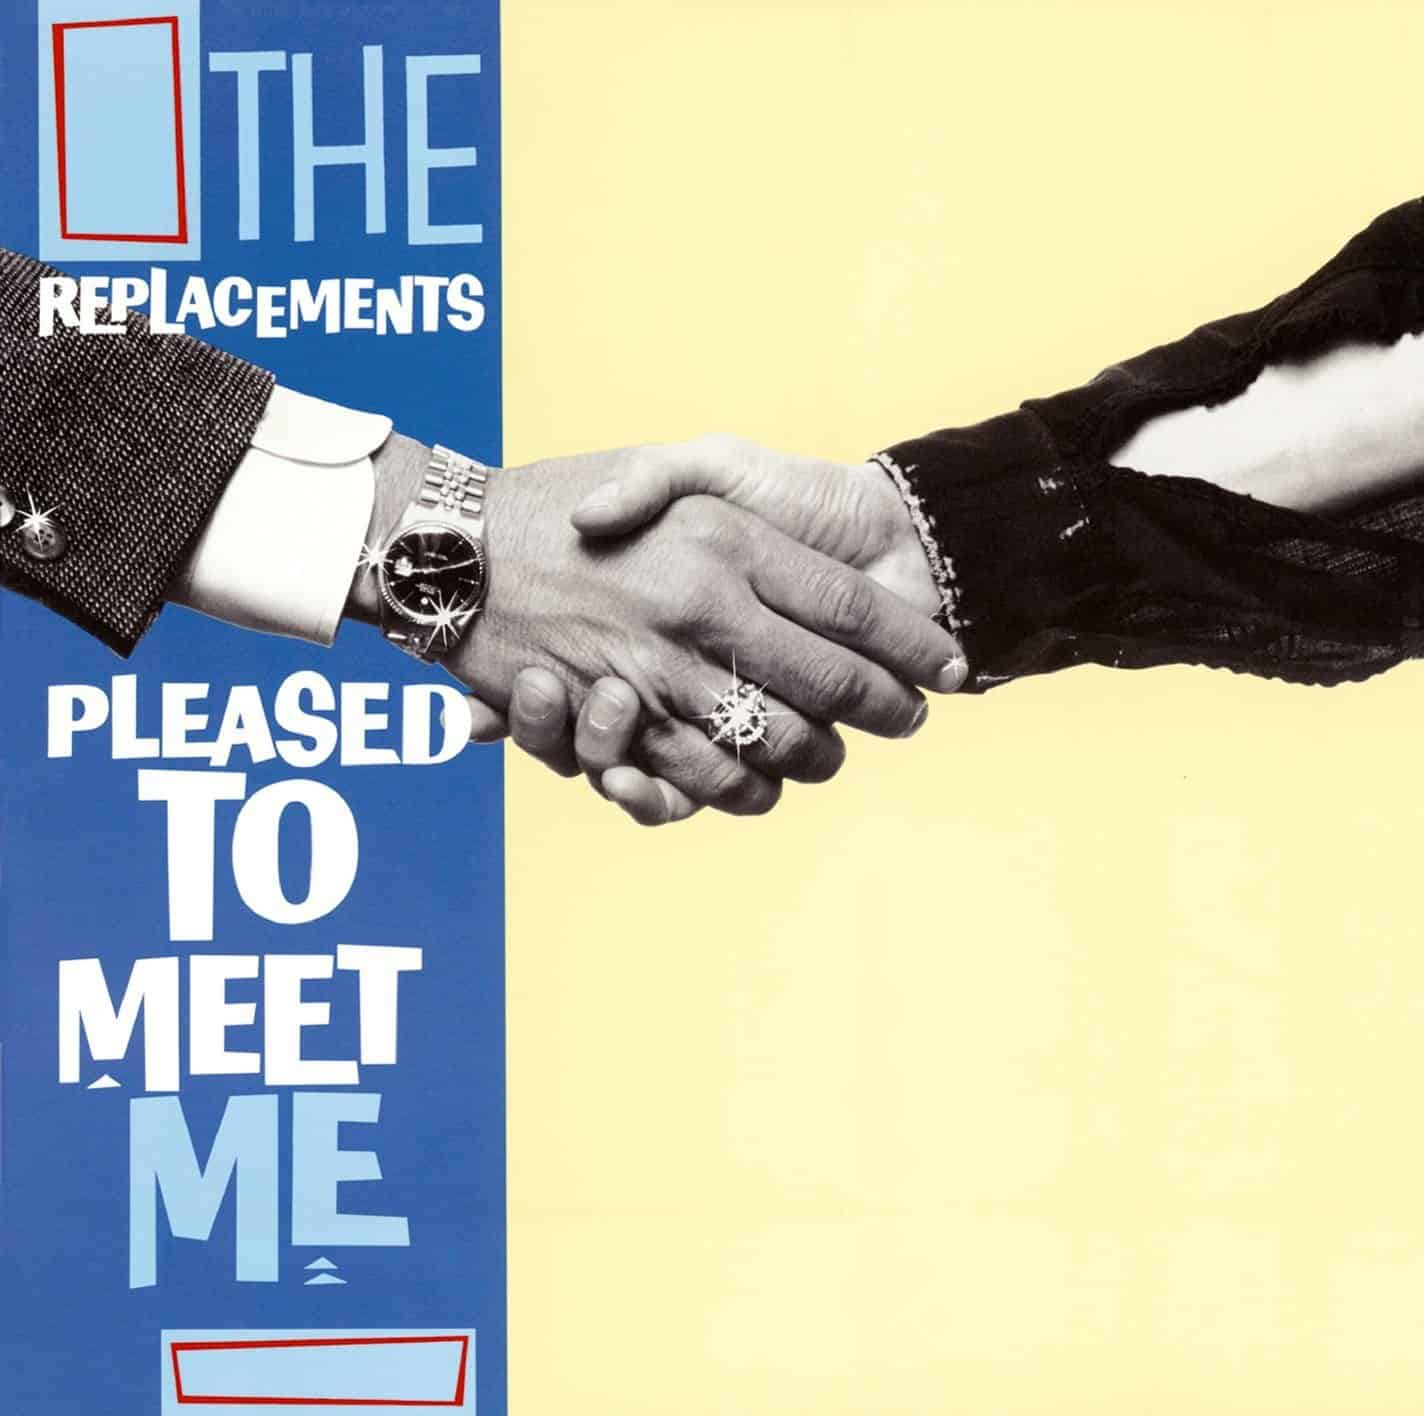 The-Replacements-Pleased-to-Meet-Me-vinyl-record-album1